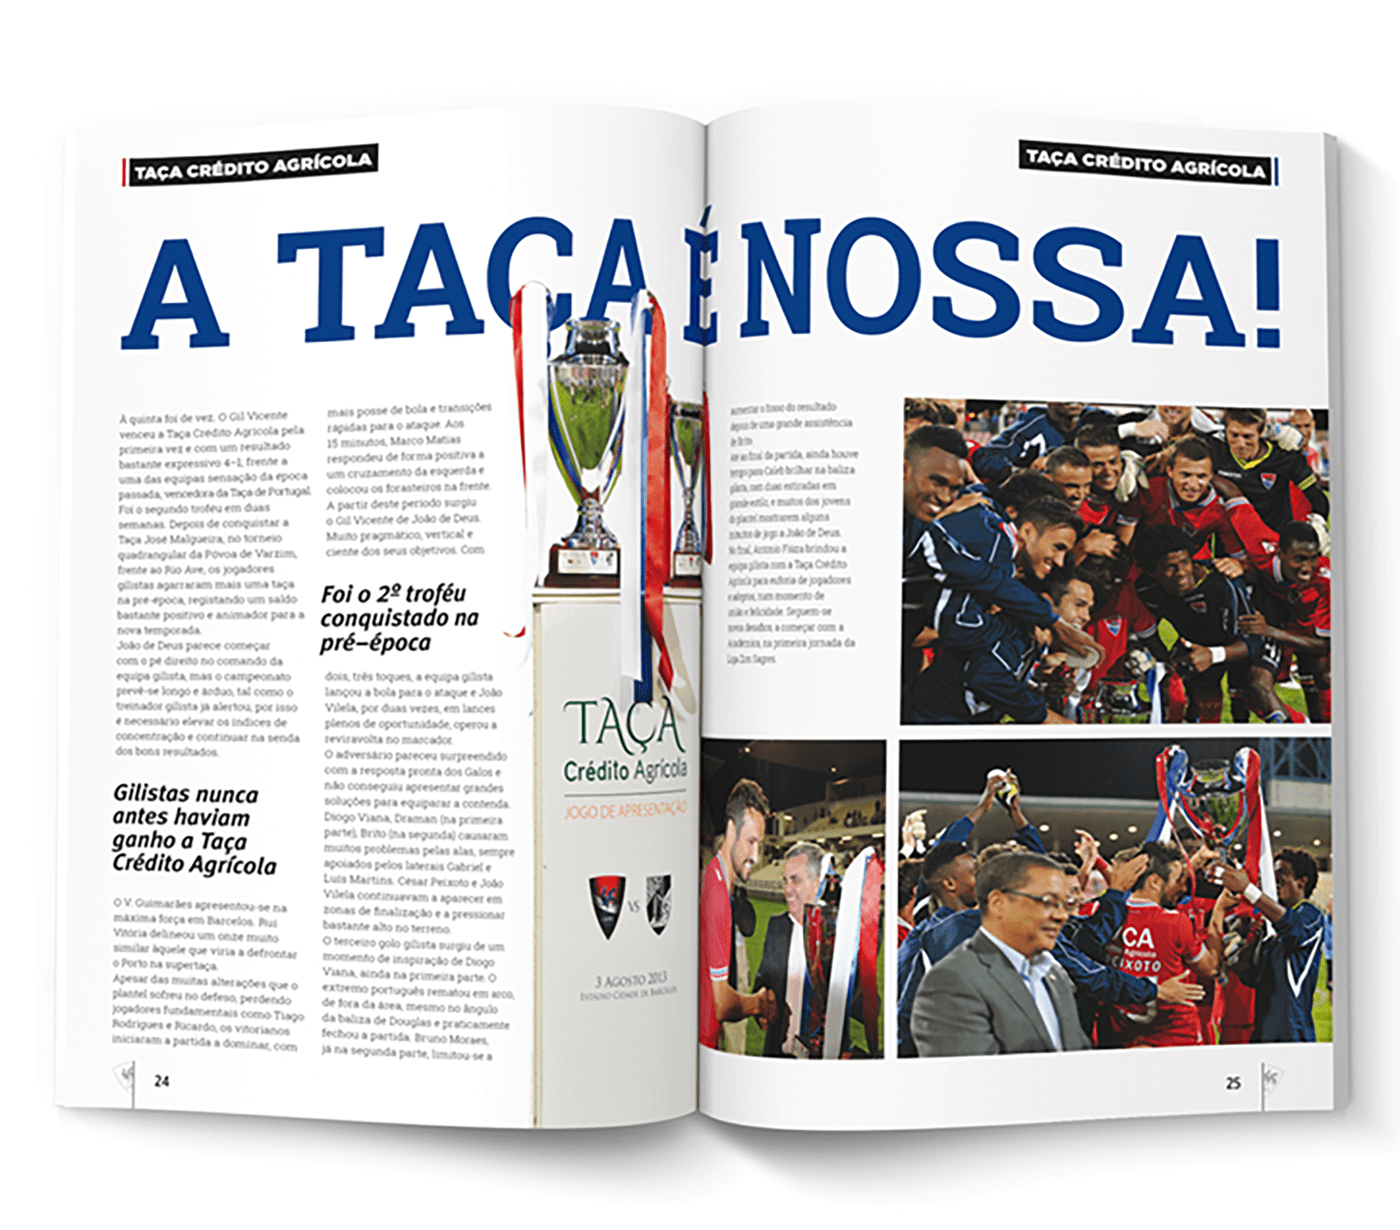 gvfc gilista N4 gil gil vicente FC sport football futebol soccer magazine clube Barcelos revista